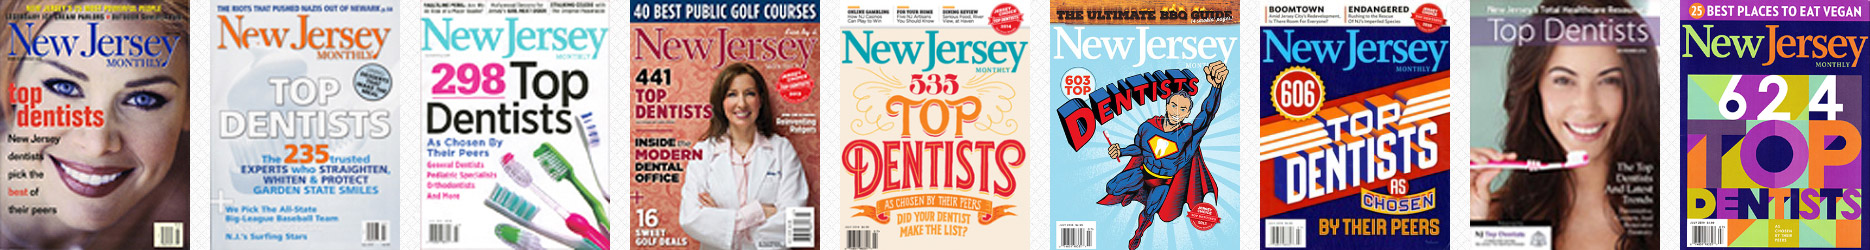 Top Dentists Magazines